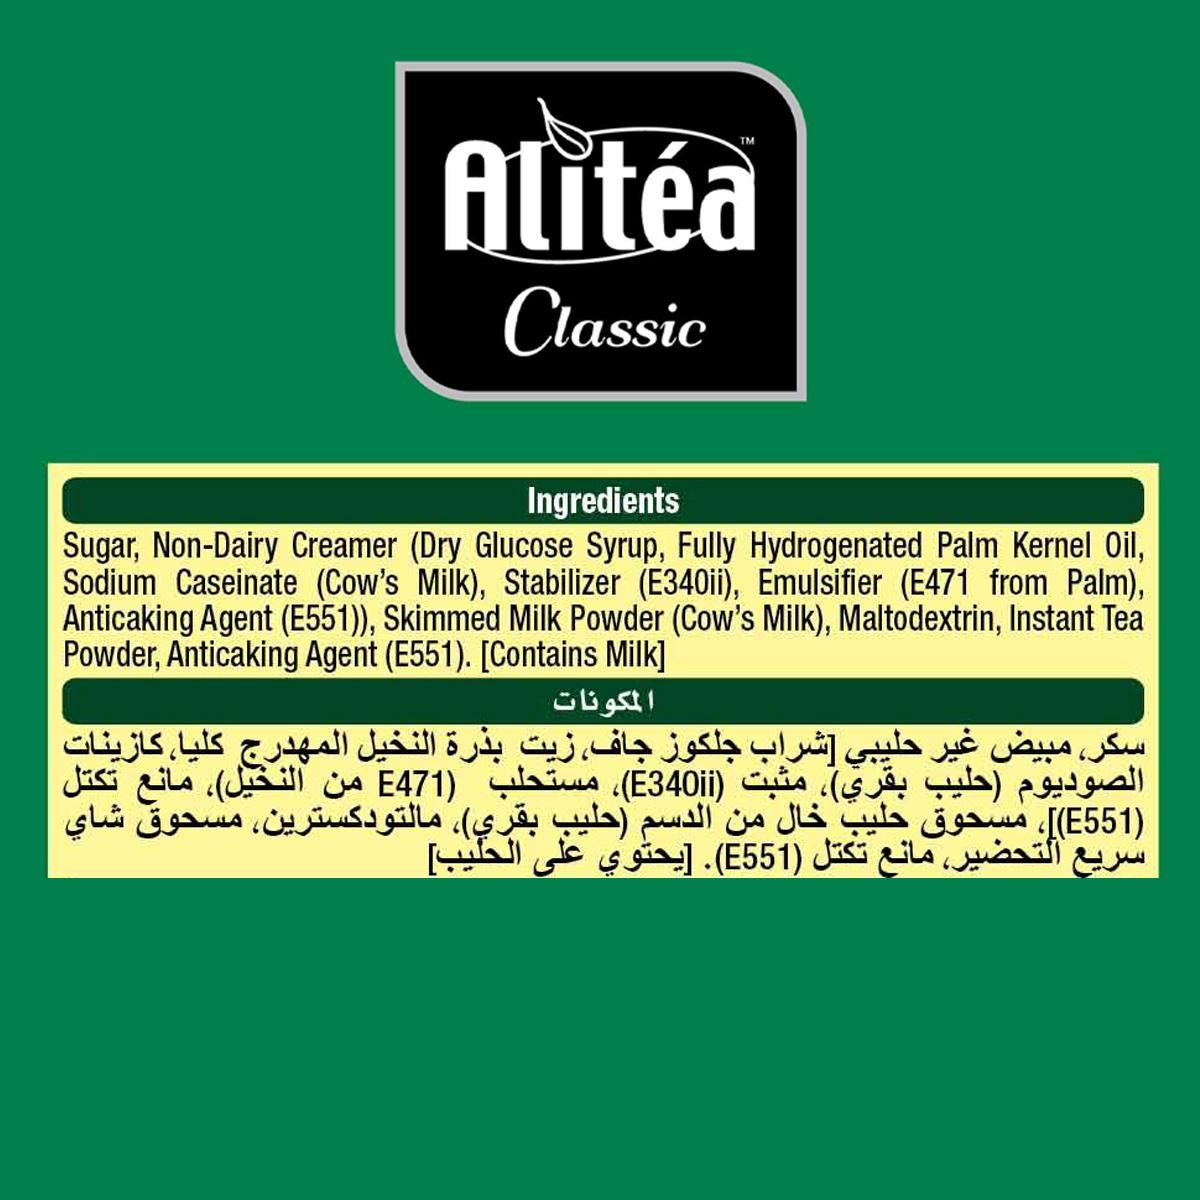 Alitéa Classic Instant Karak Tea